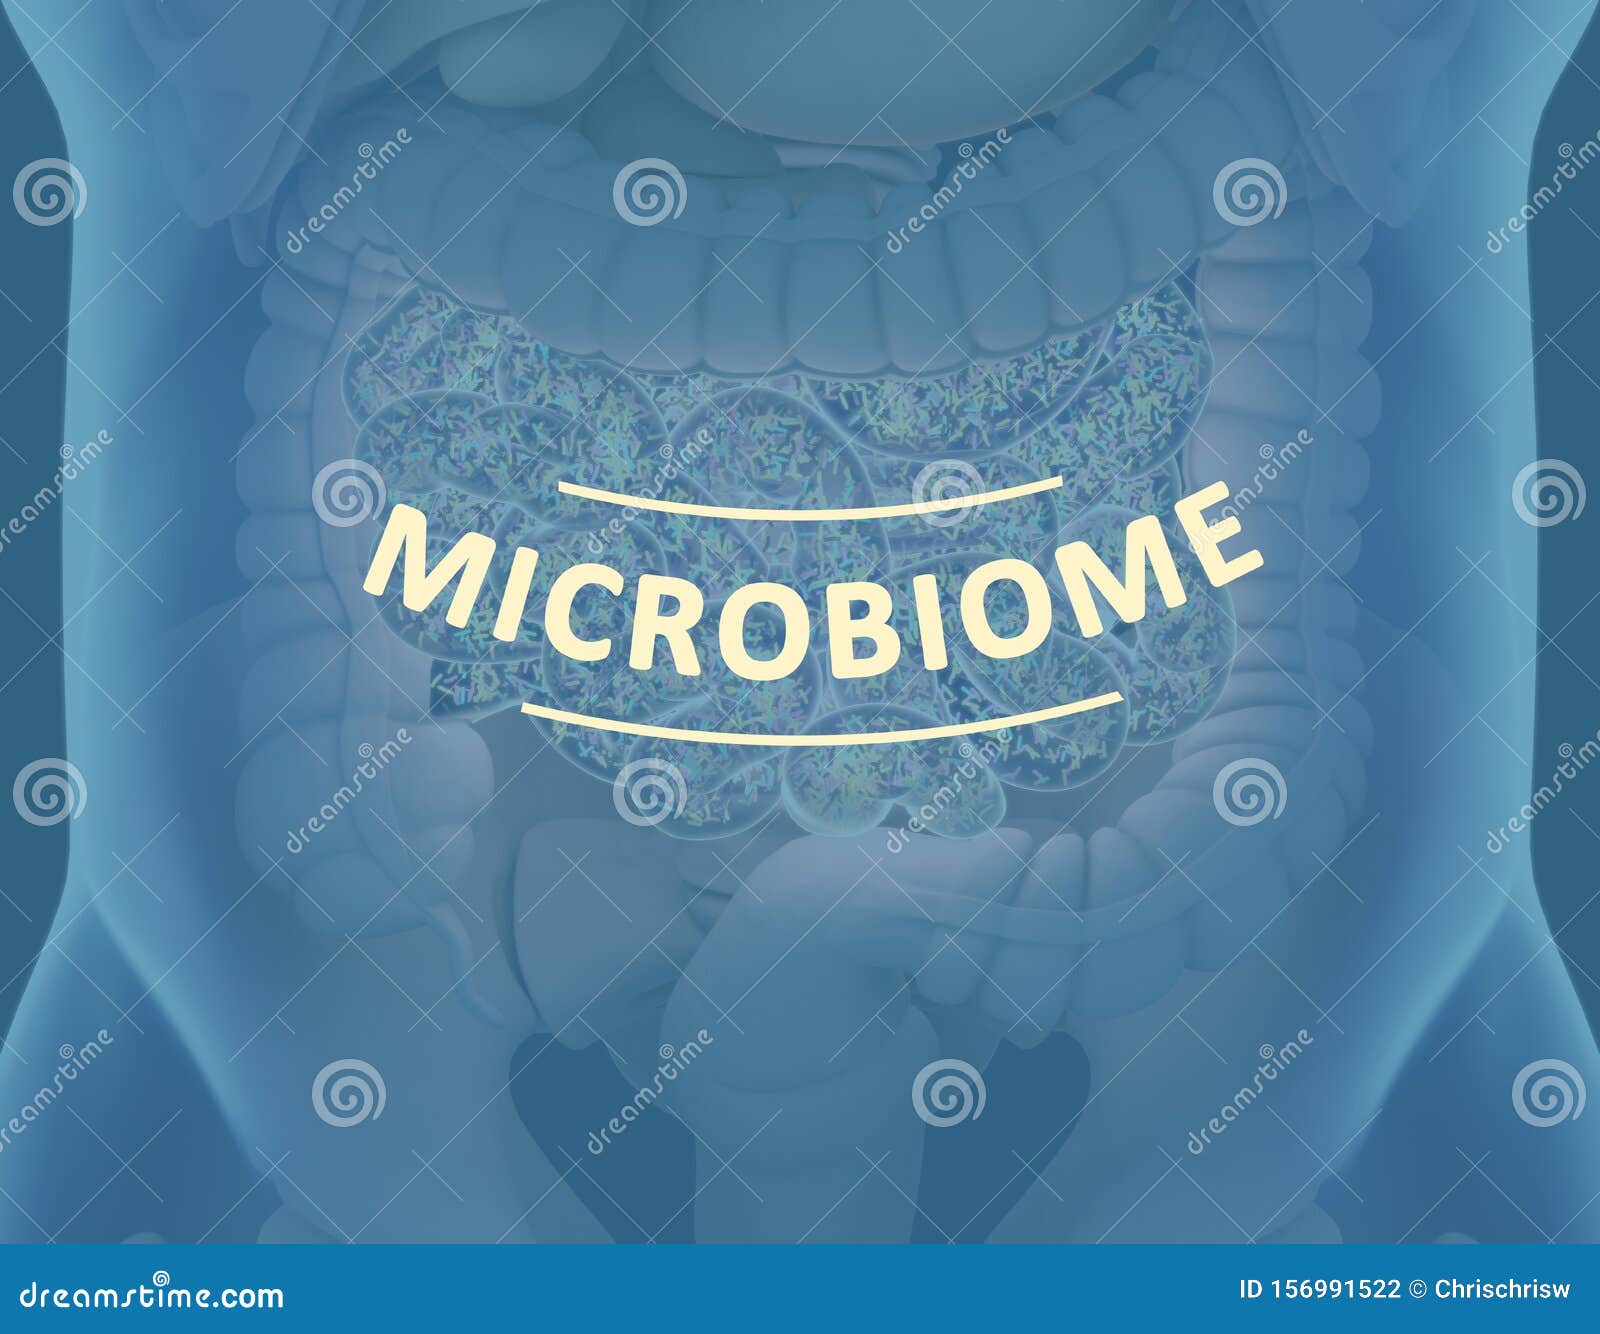 gut bacteria , gut flora, microbiome. bacteria inside the small intestine, concept, representation. 3d 